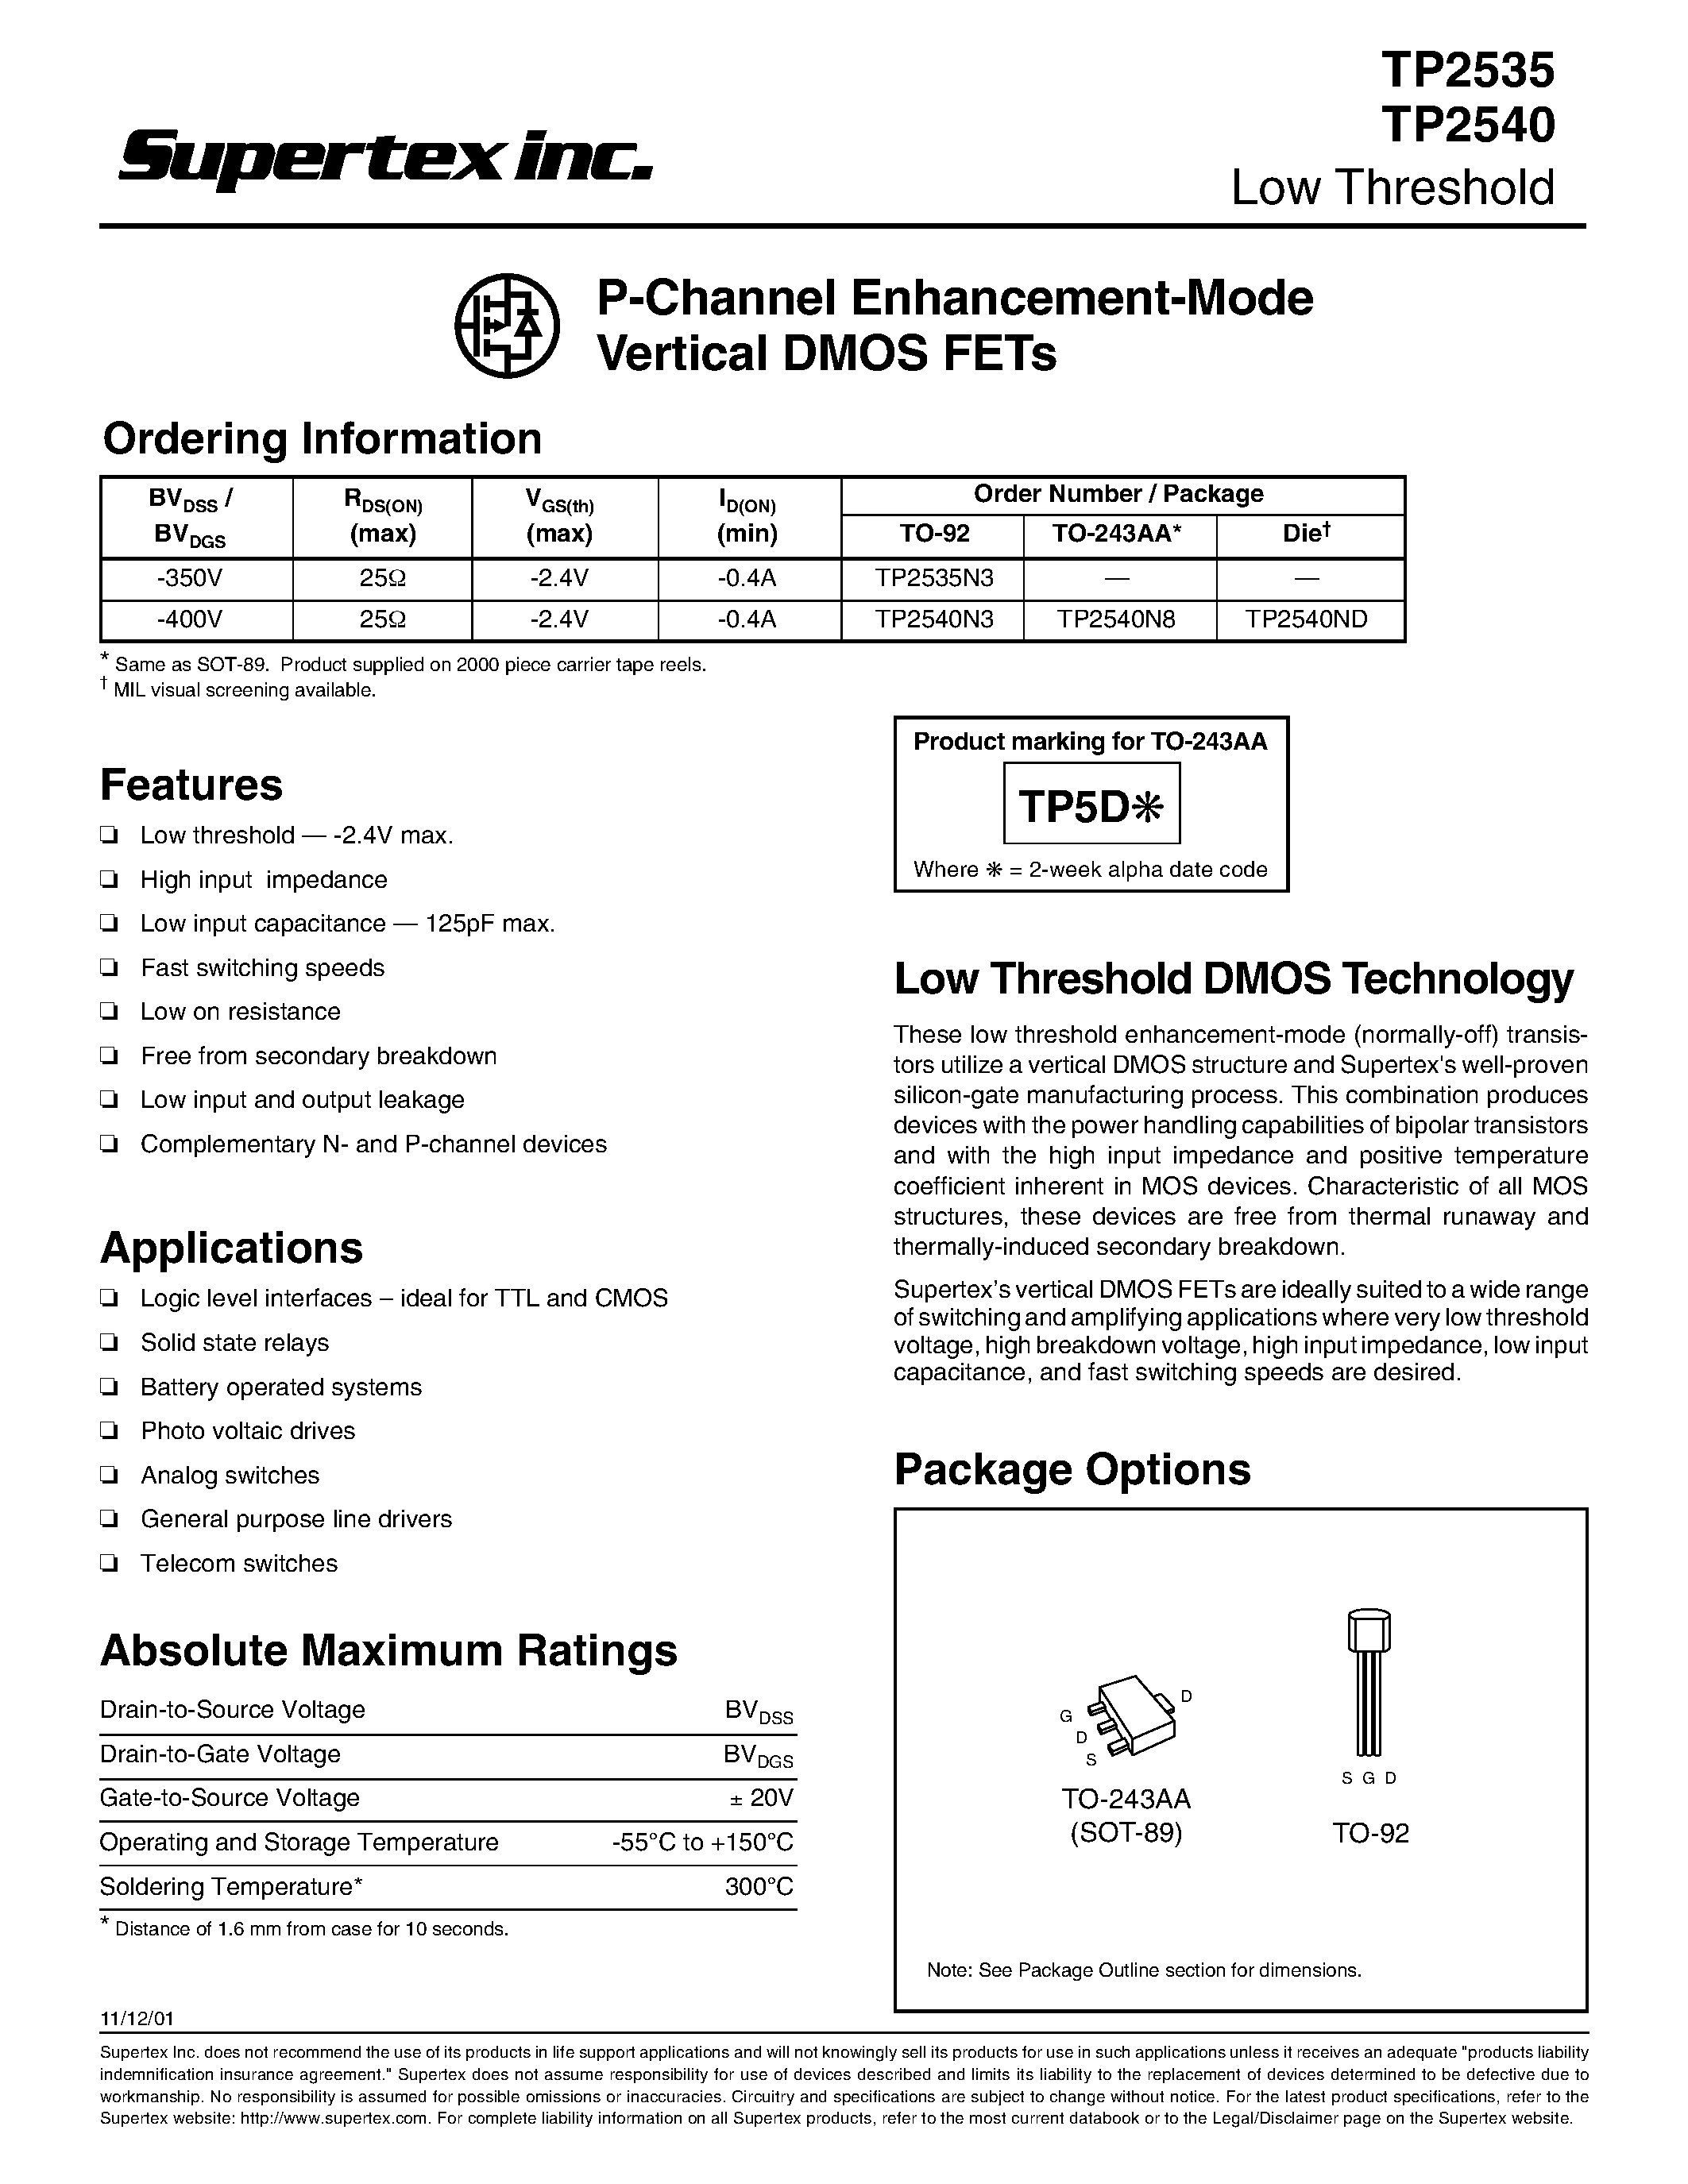 Datasheet TP2540ND - P-Channel Enhancement-Mode Vertical DMOS FETs page 1